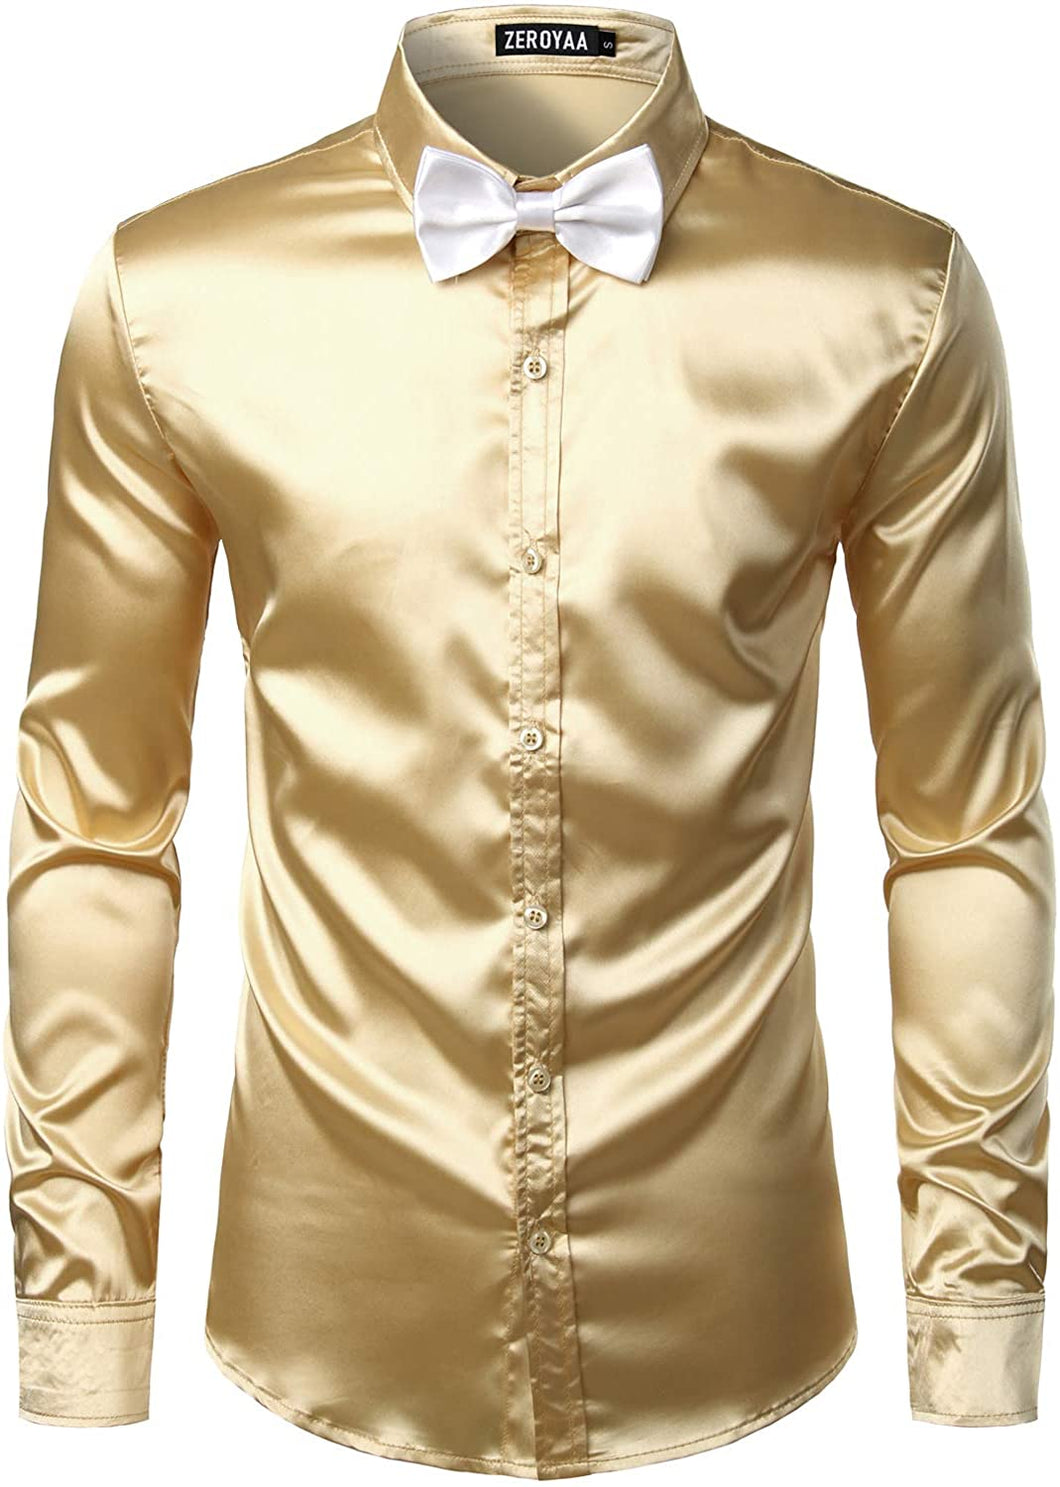 Men's Luxury Champagne Gold Shiny Silk Like Satin Button Up Shirt